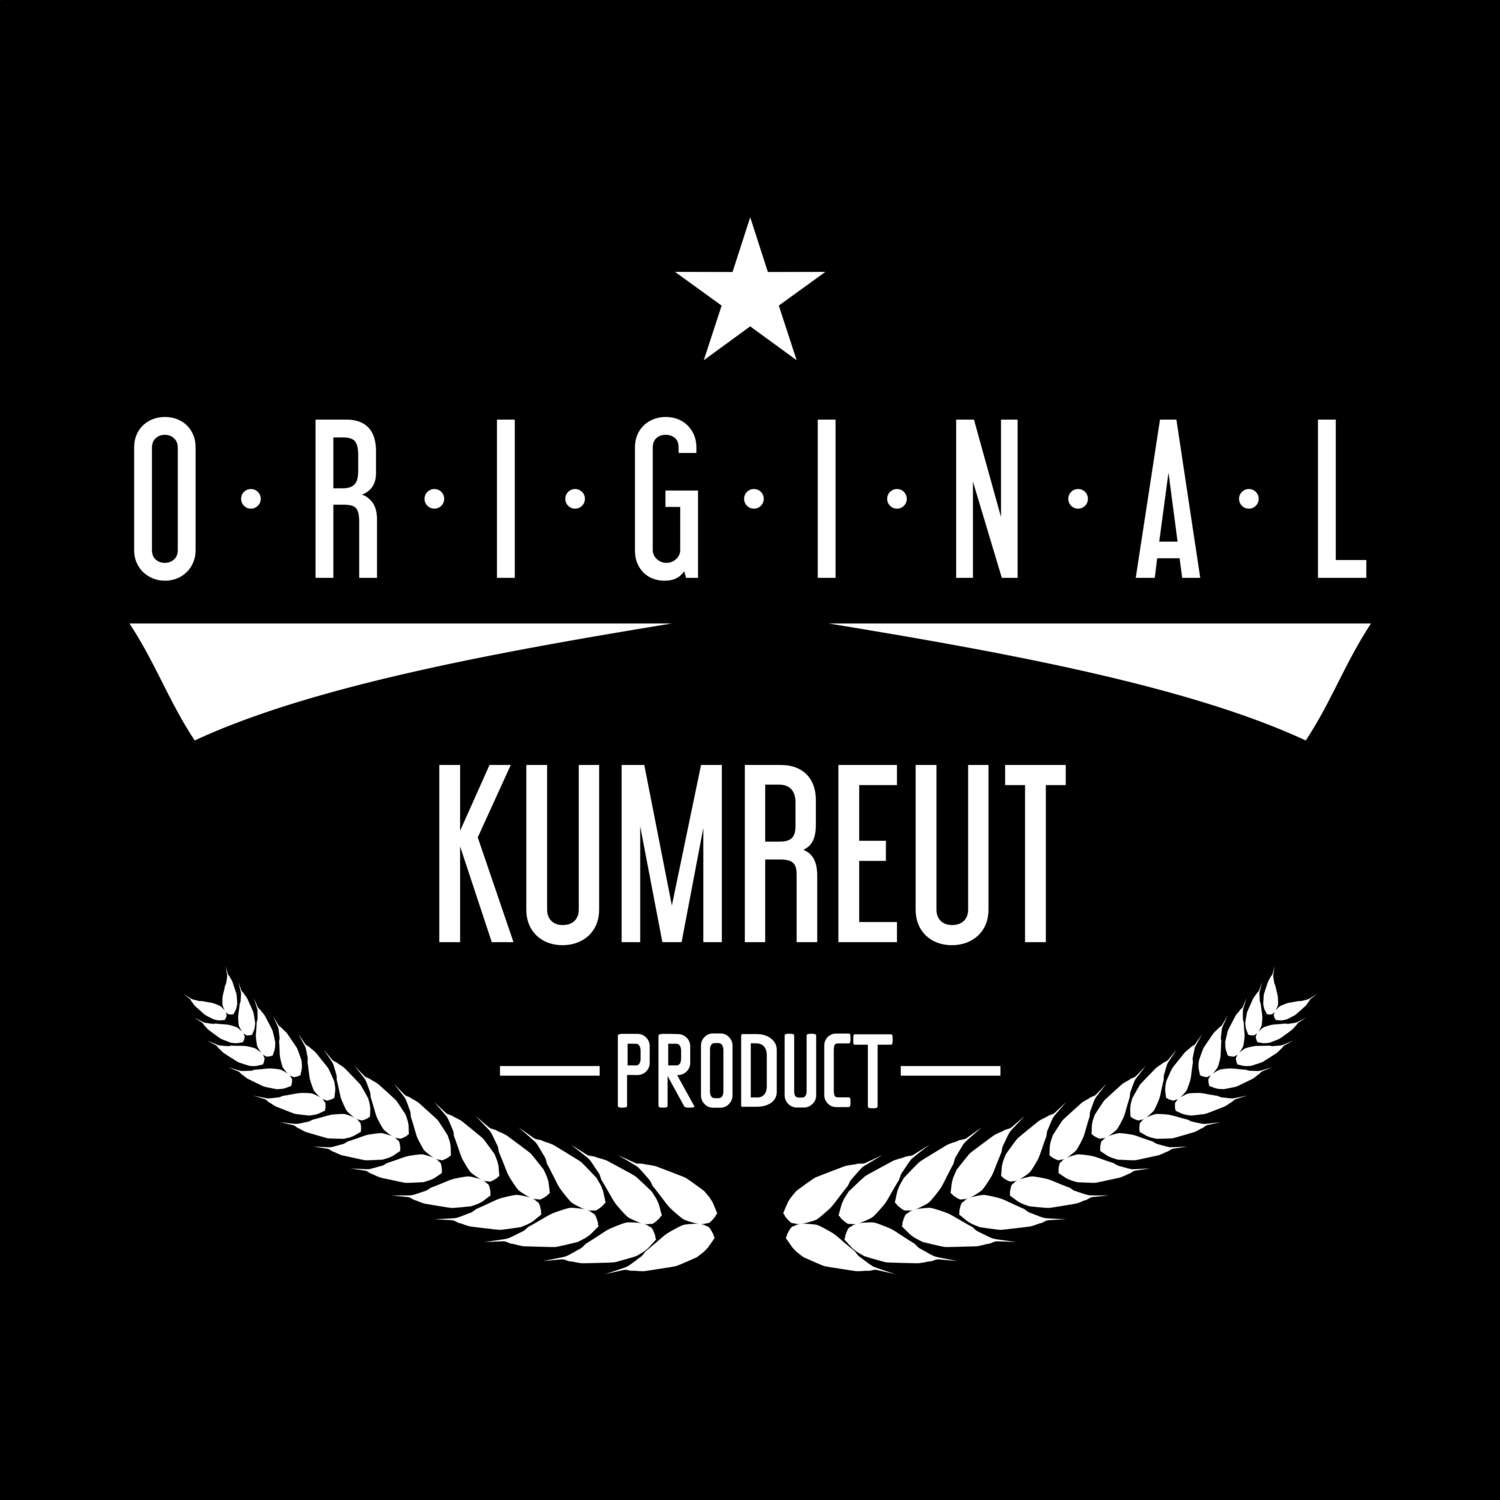 Kumreut T-Shirt »Original Product«